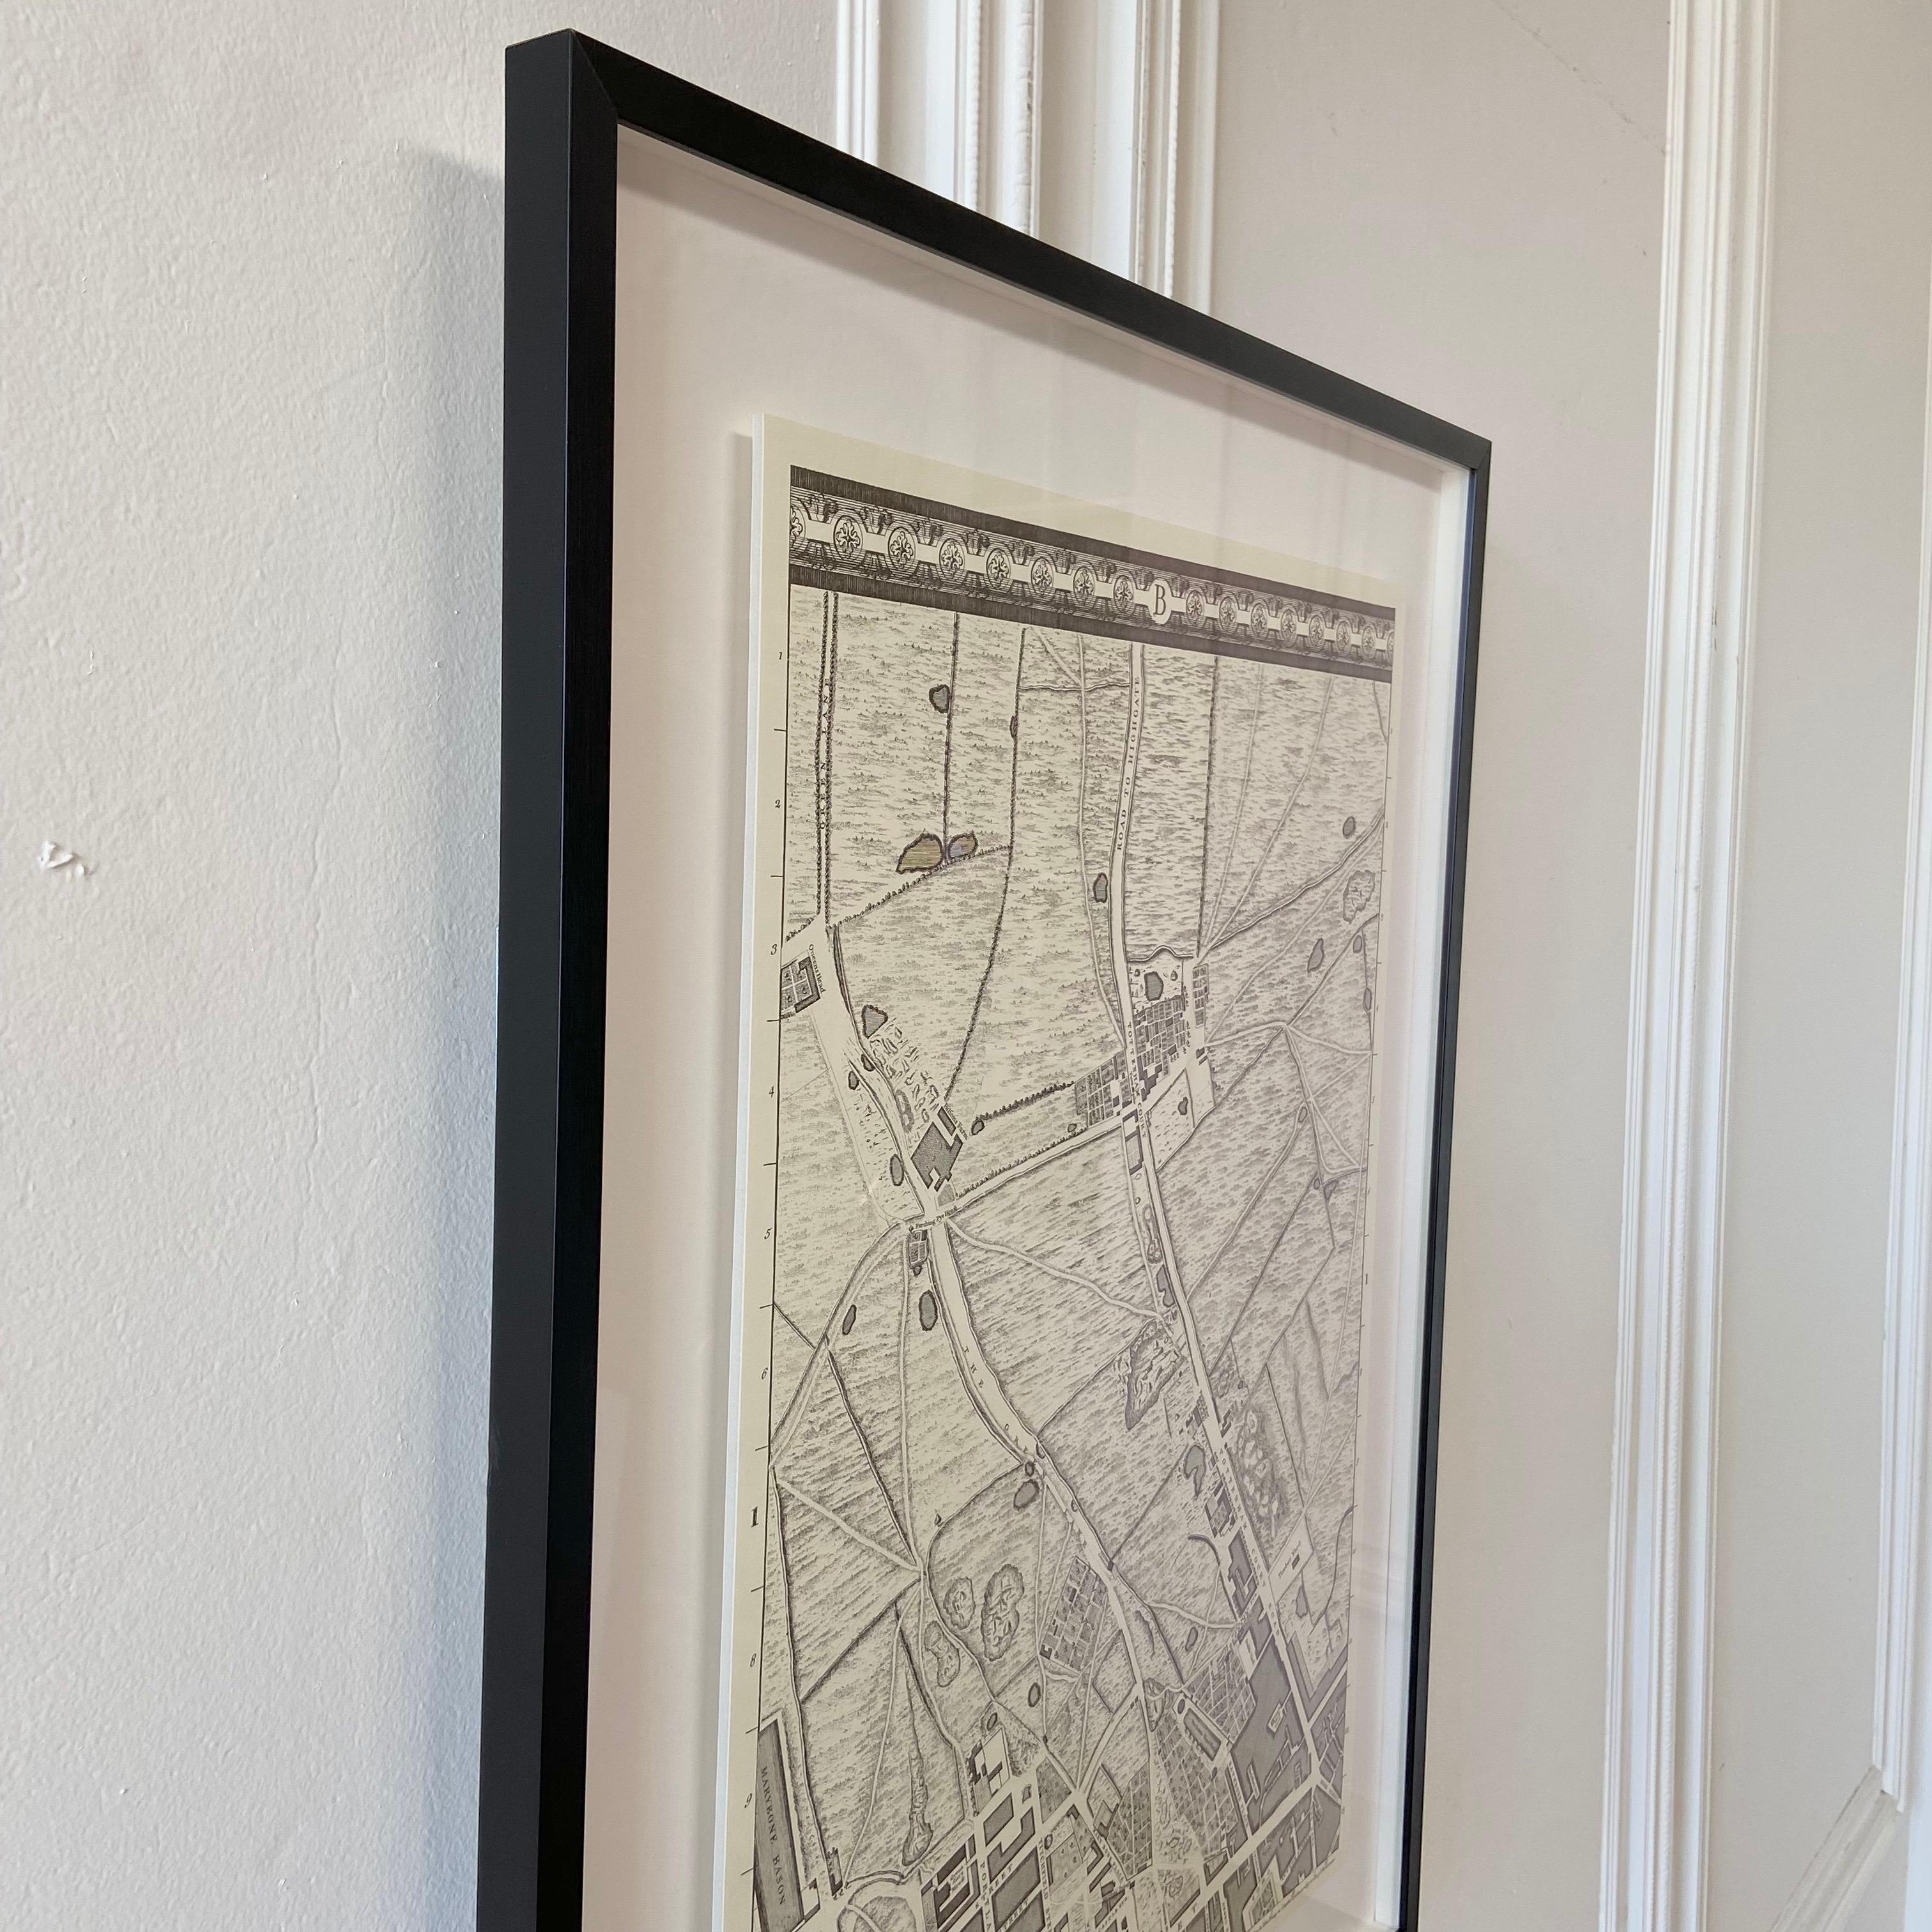 Paper Historical Urban Plan of London Cities Framed Artwork